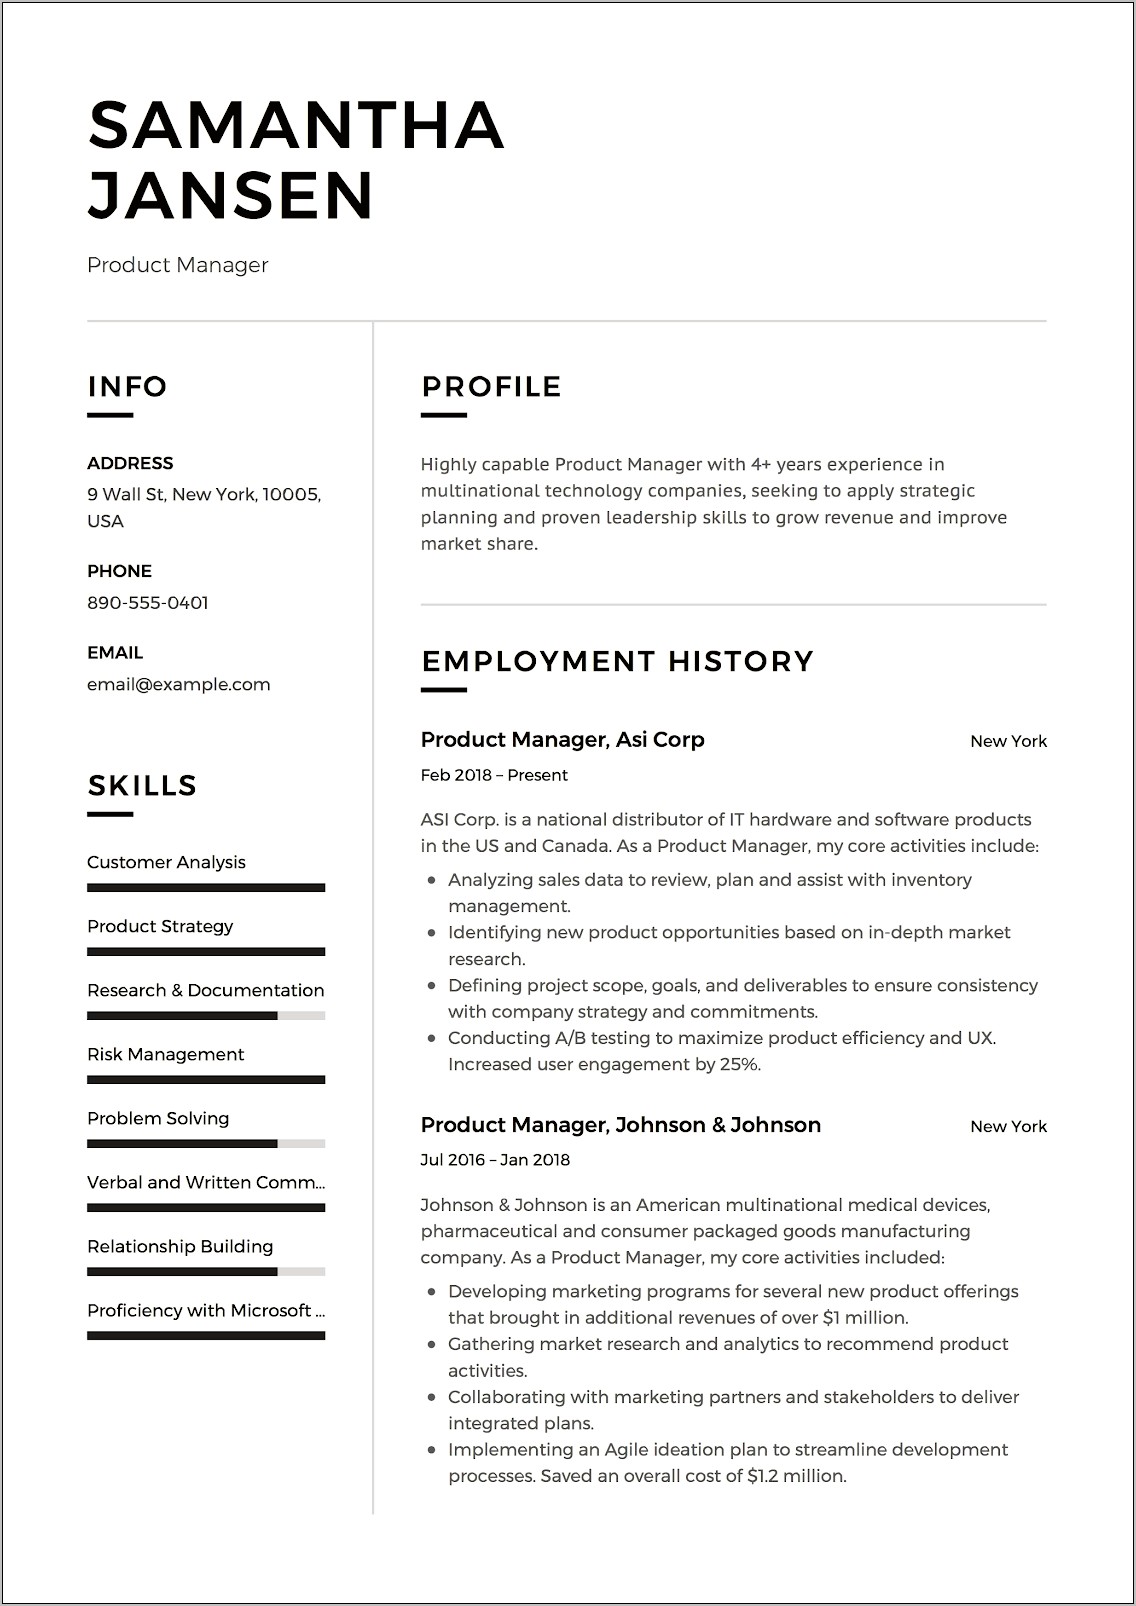 Job Profile Example In Resume